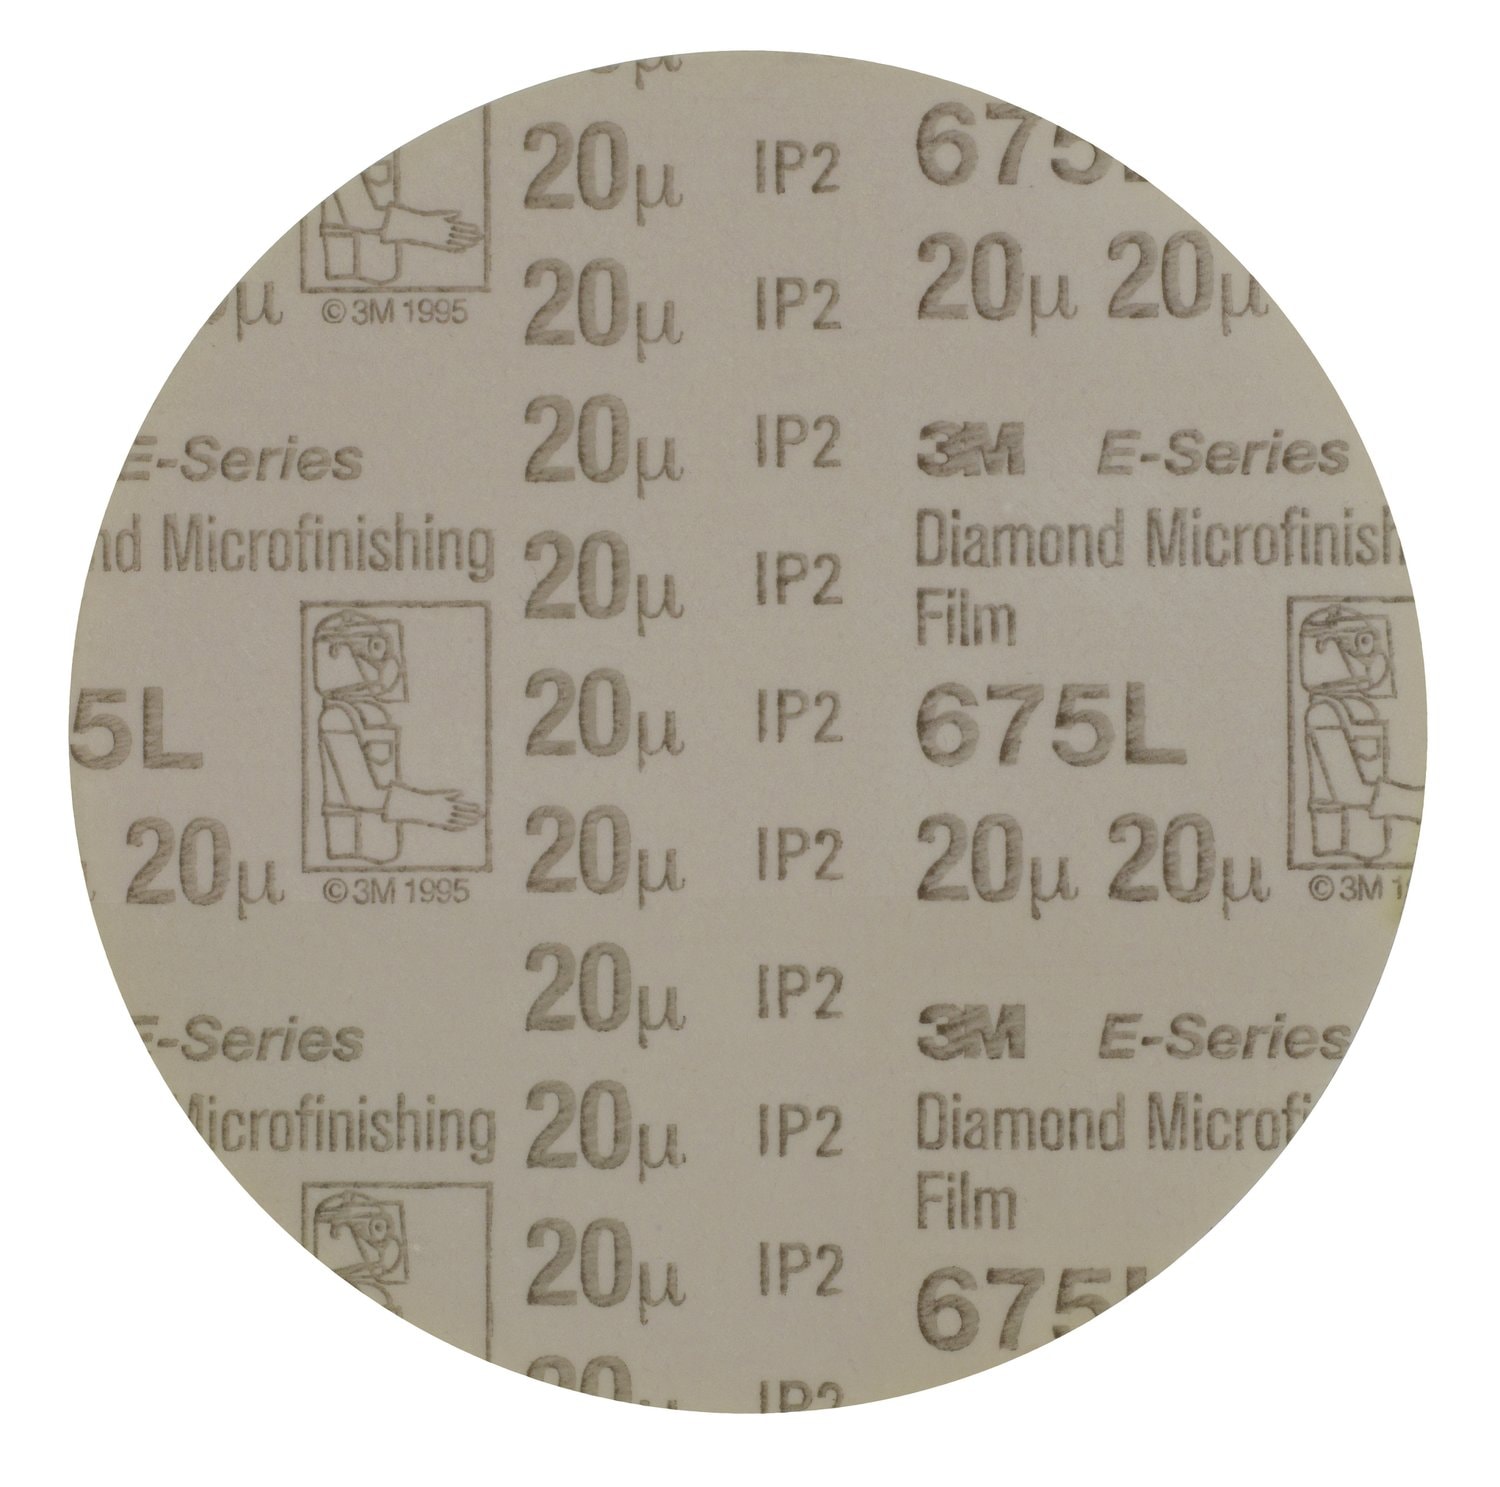 7010509688 - 3M Diamond Microfinishing Film PSA Disc 675L, 20 Mic 5MIL, Beige, 6 in
x 1/2 in, Die 600W